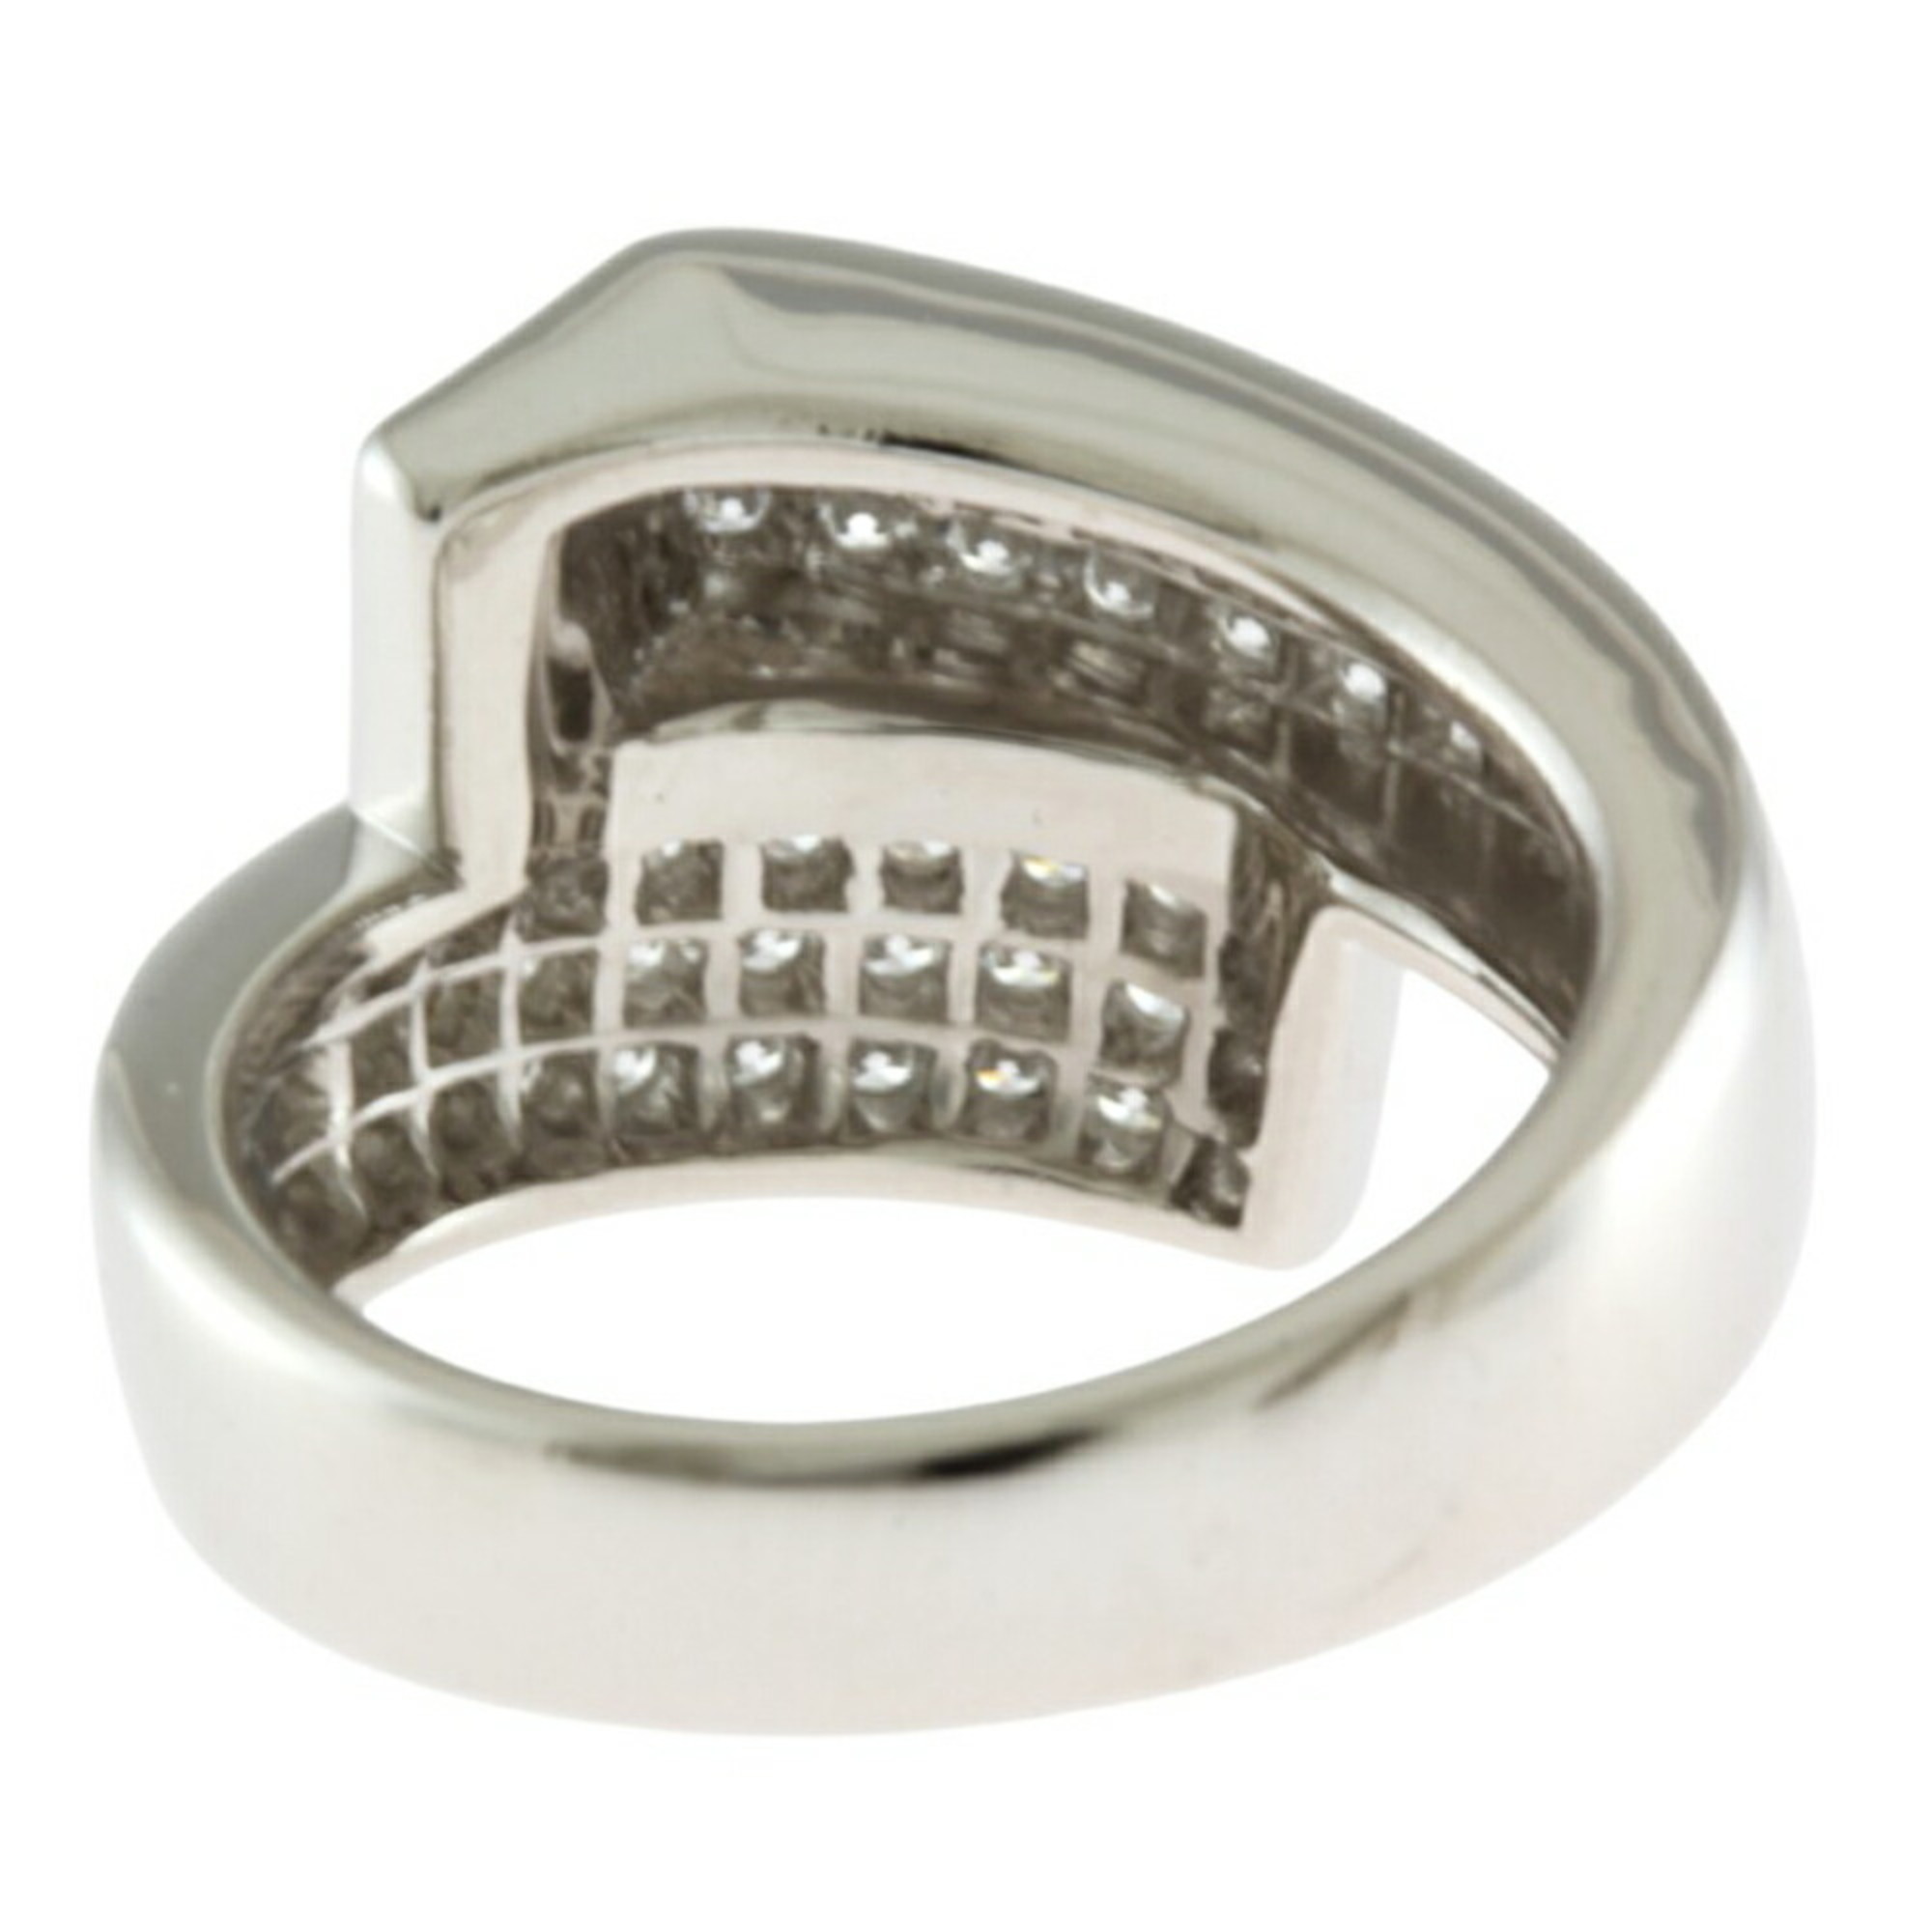 POLA Ring, POLA, size 13, Pt900 platinum, diamond, 0.63ct, ladies, diamond